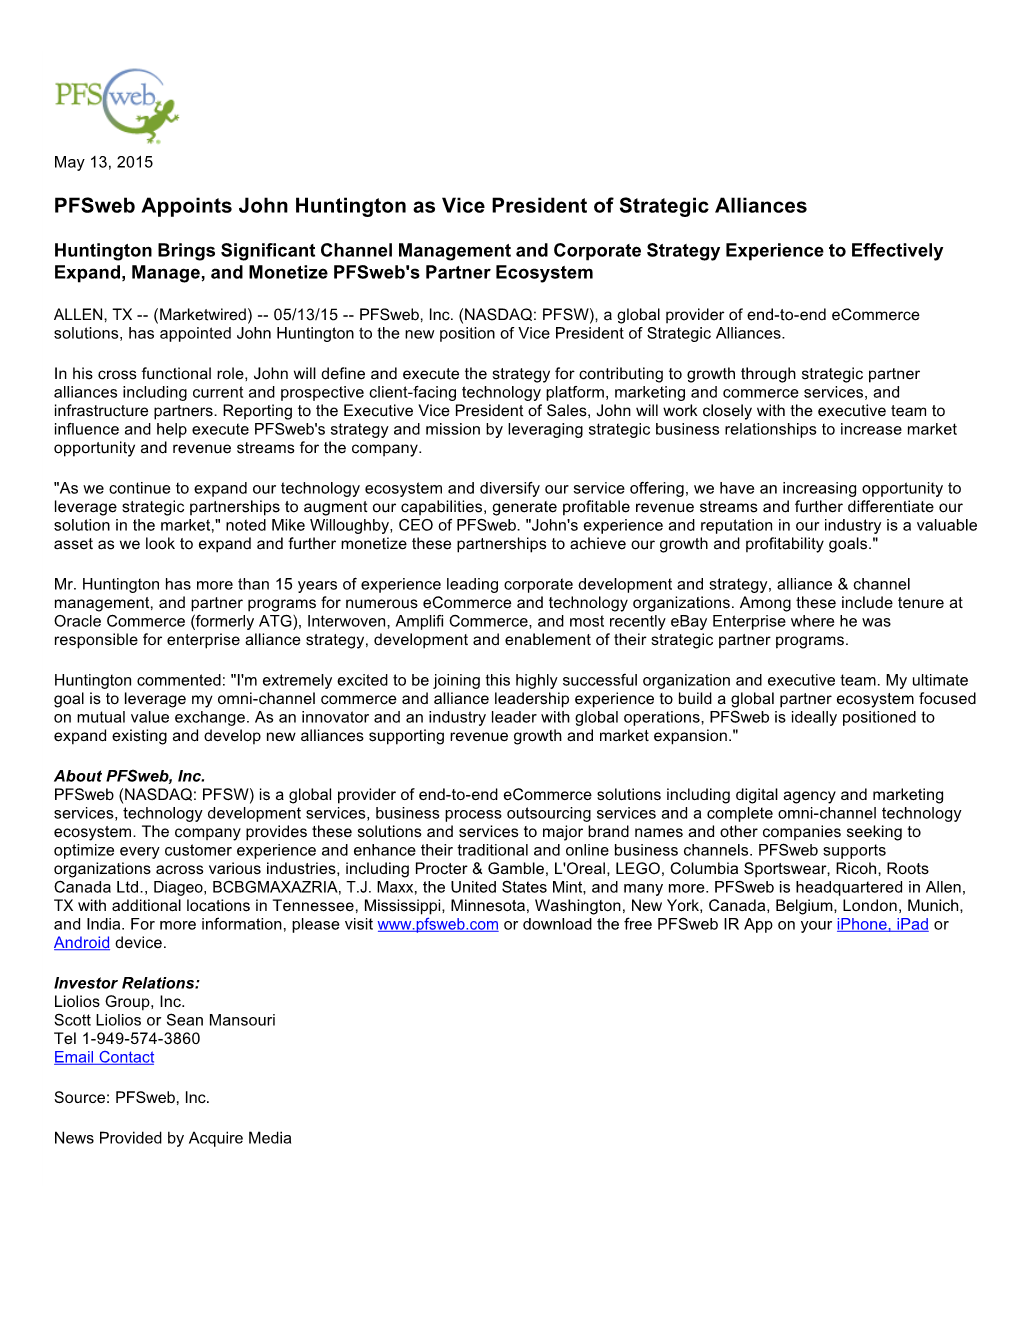 Pfsweb Appoints John Huntington As Vice President of Strategic Alliances